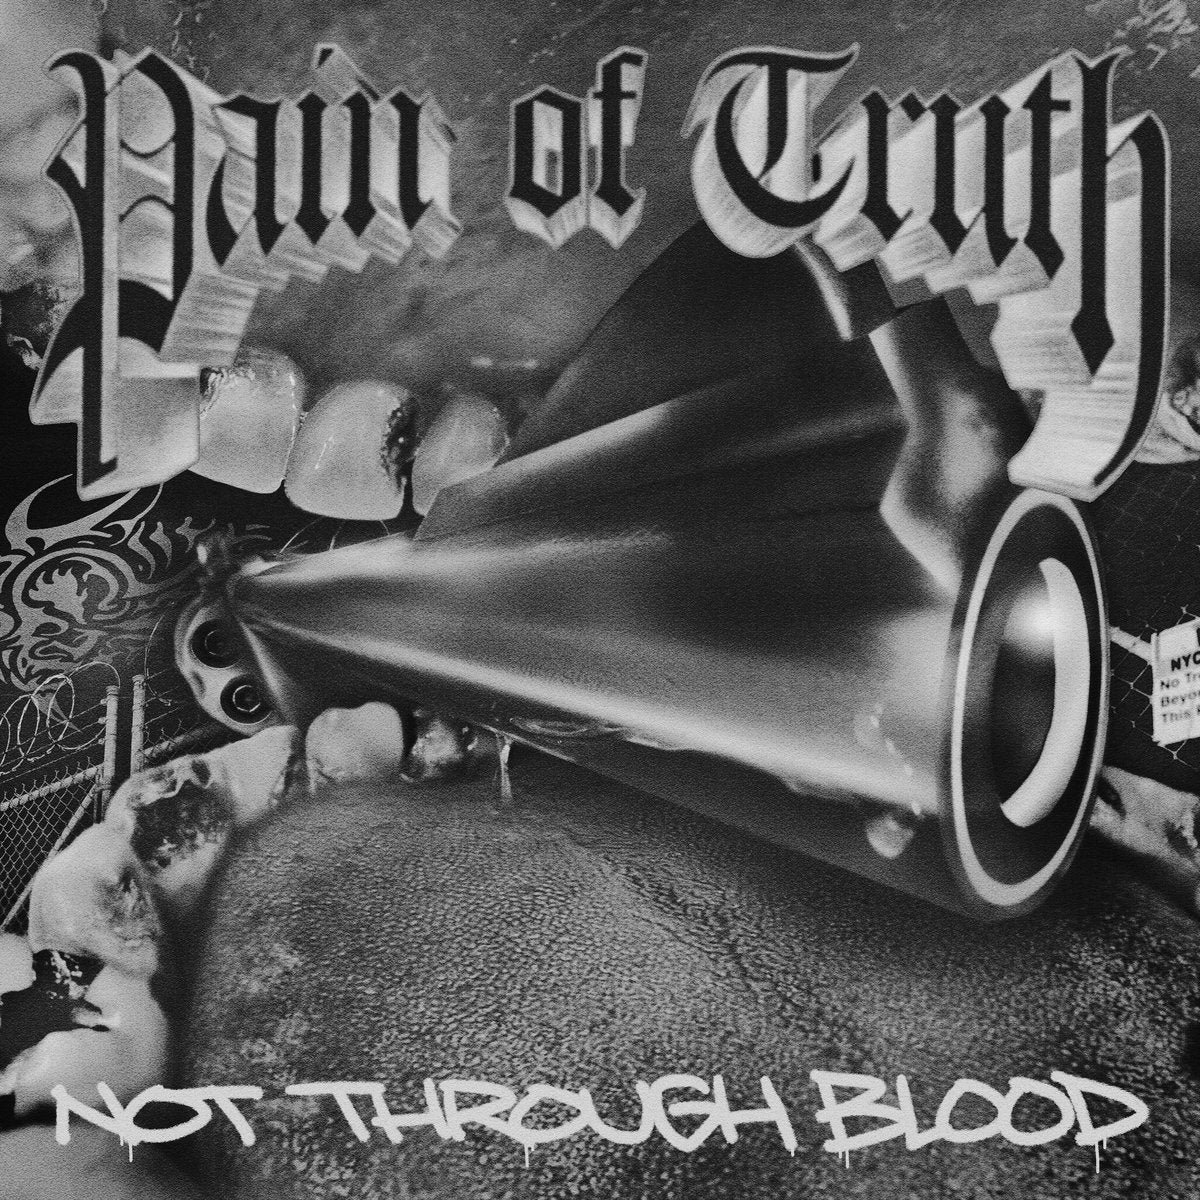 Pain of Truth "Not Through Blood" 12" Vinyl